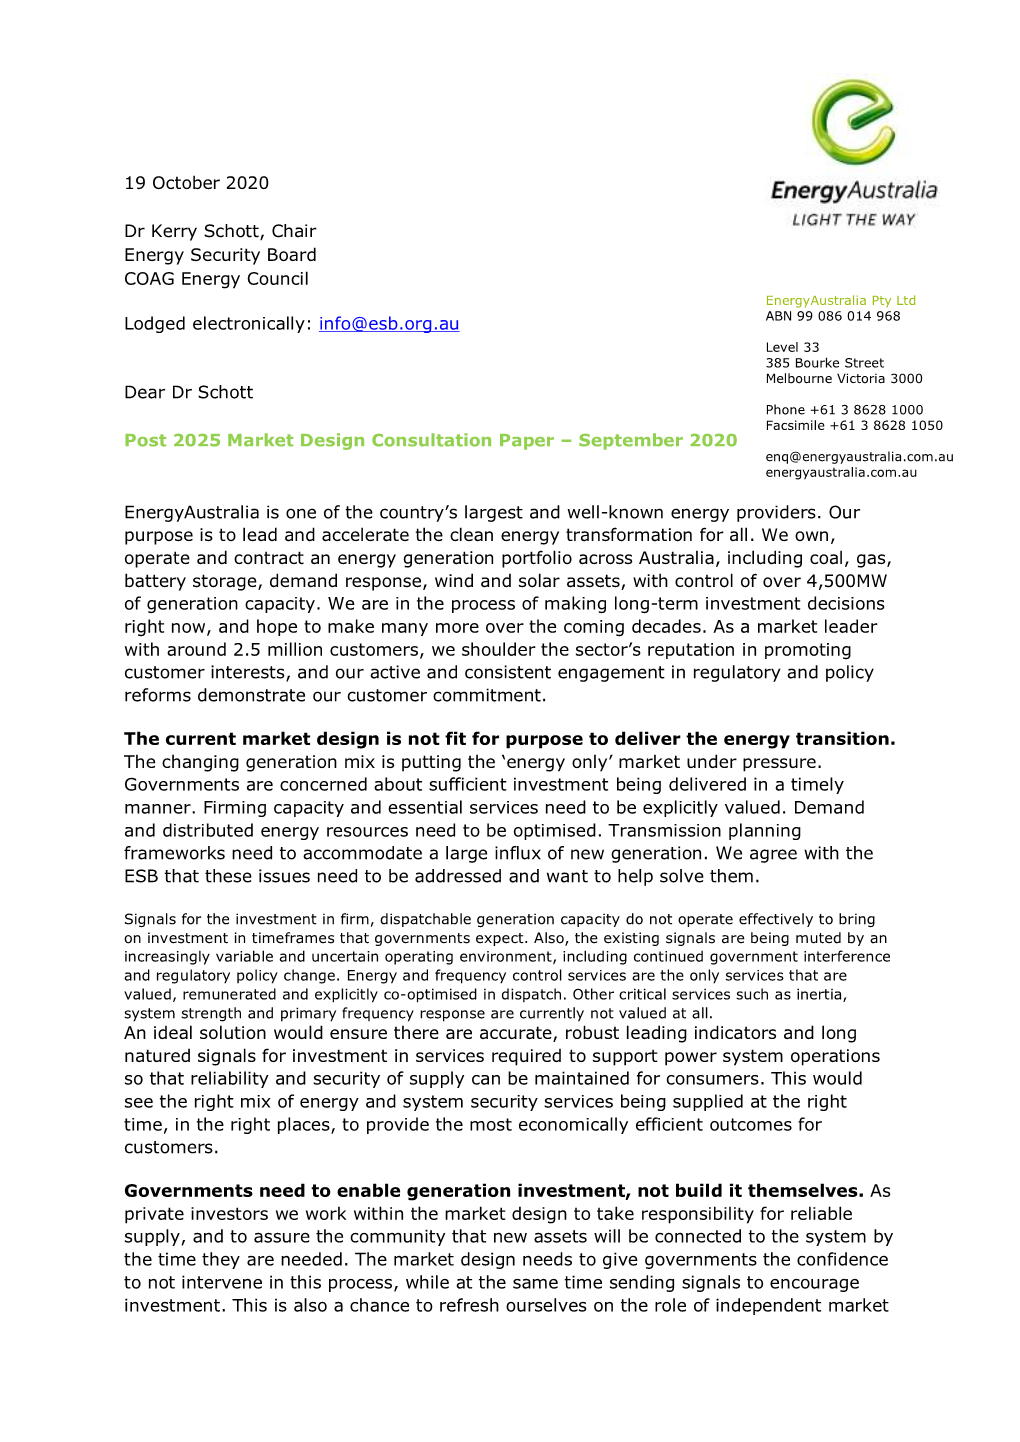 Energyaustralia Response to P2025 Market Design Consultation Paper.Pdf